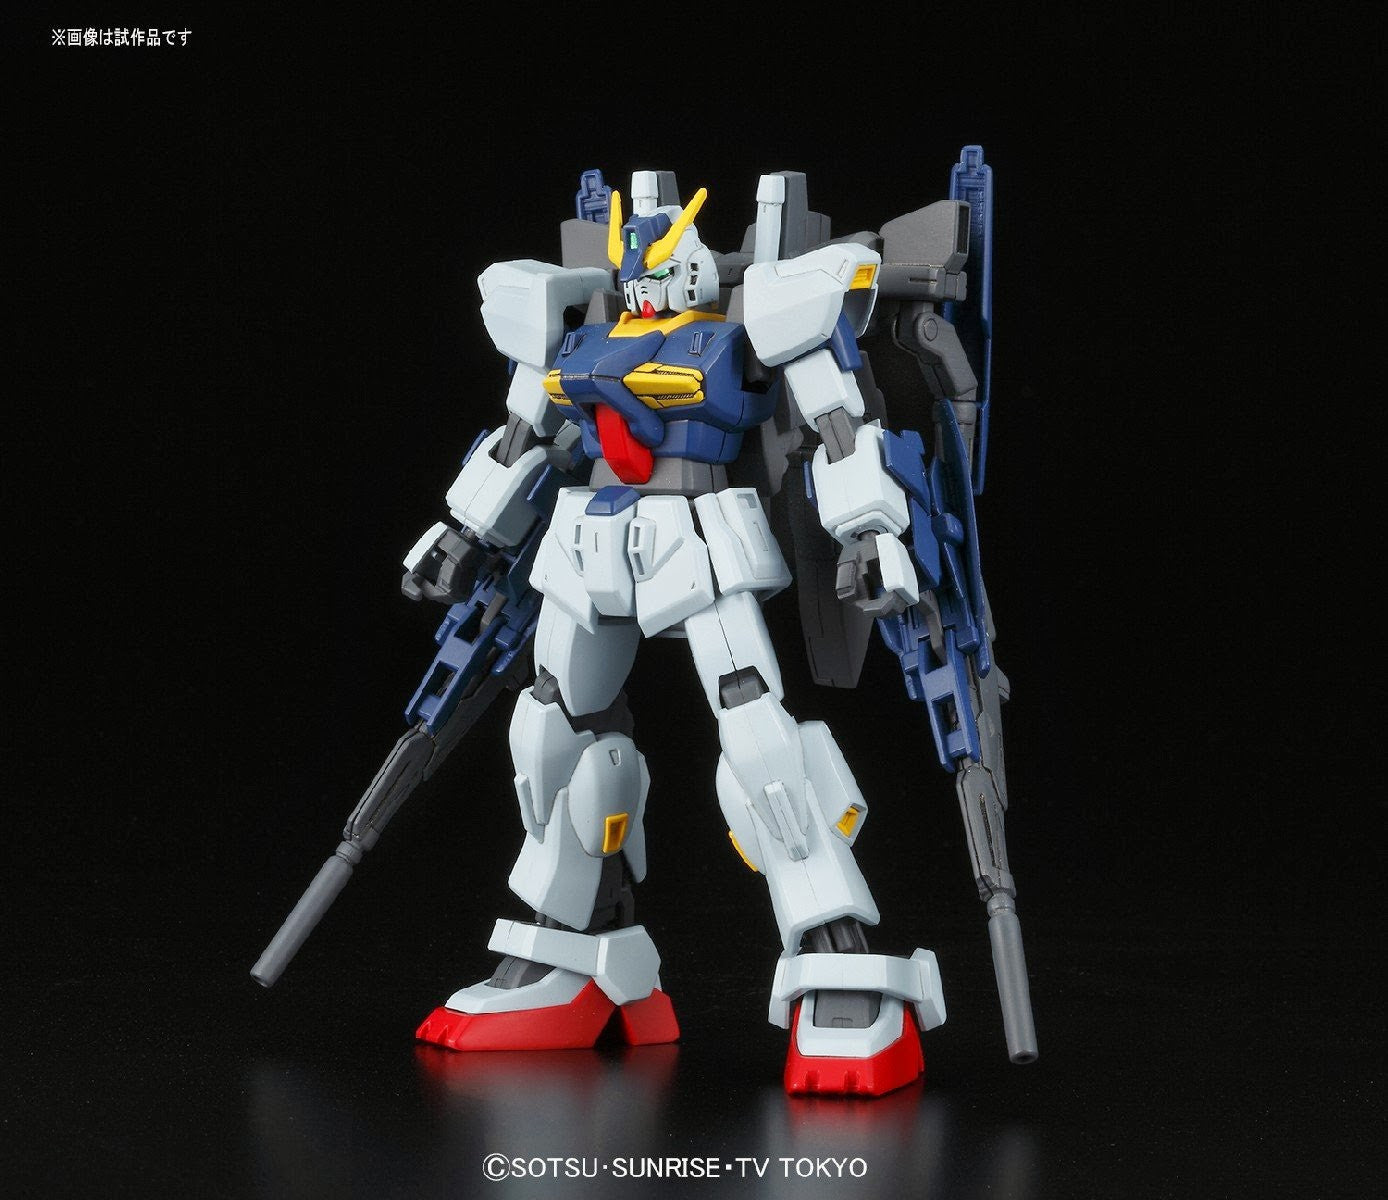 HG 1/144 Build Gundam MK-II